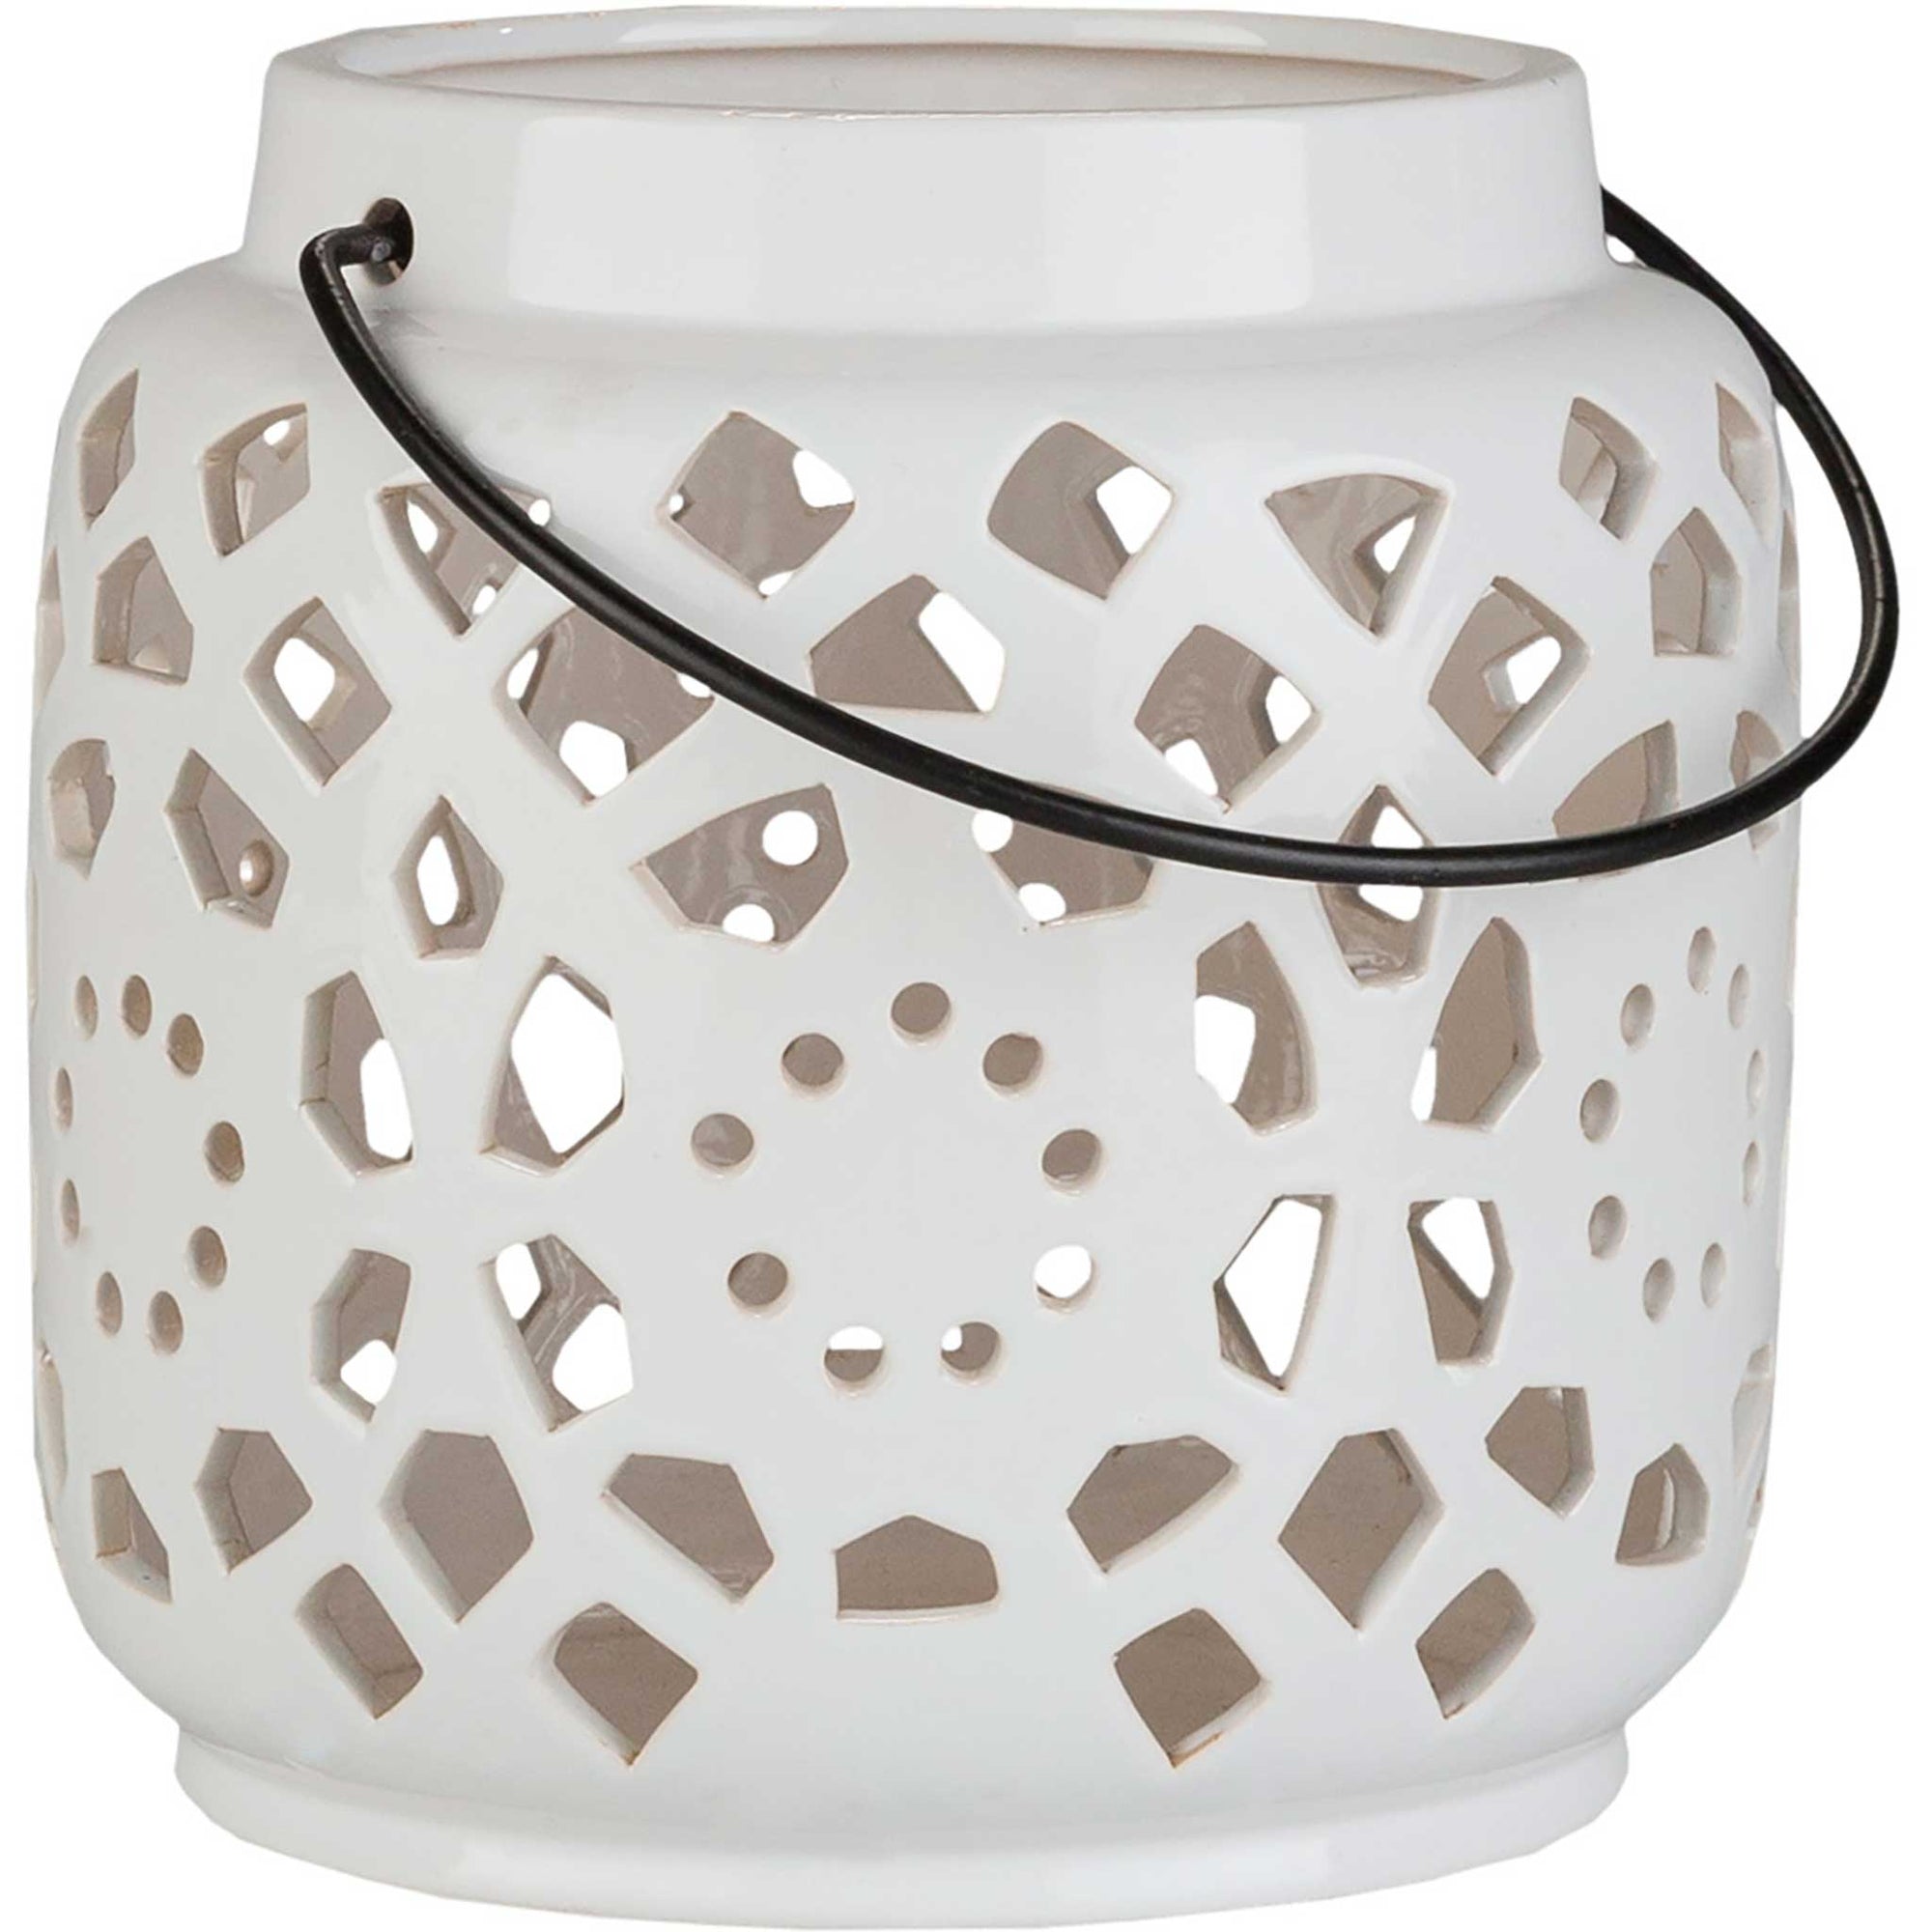 Avery Ceramic Lantern White